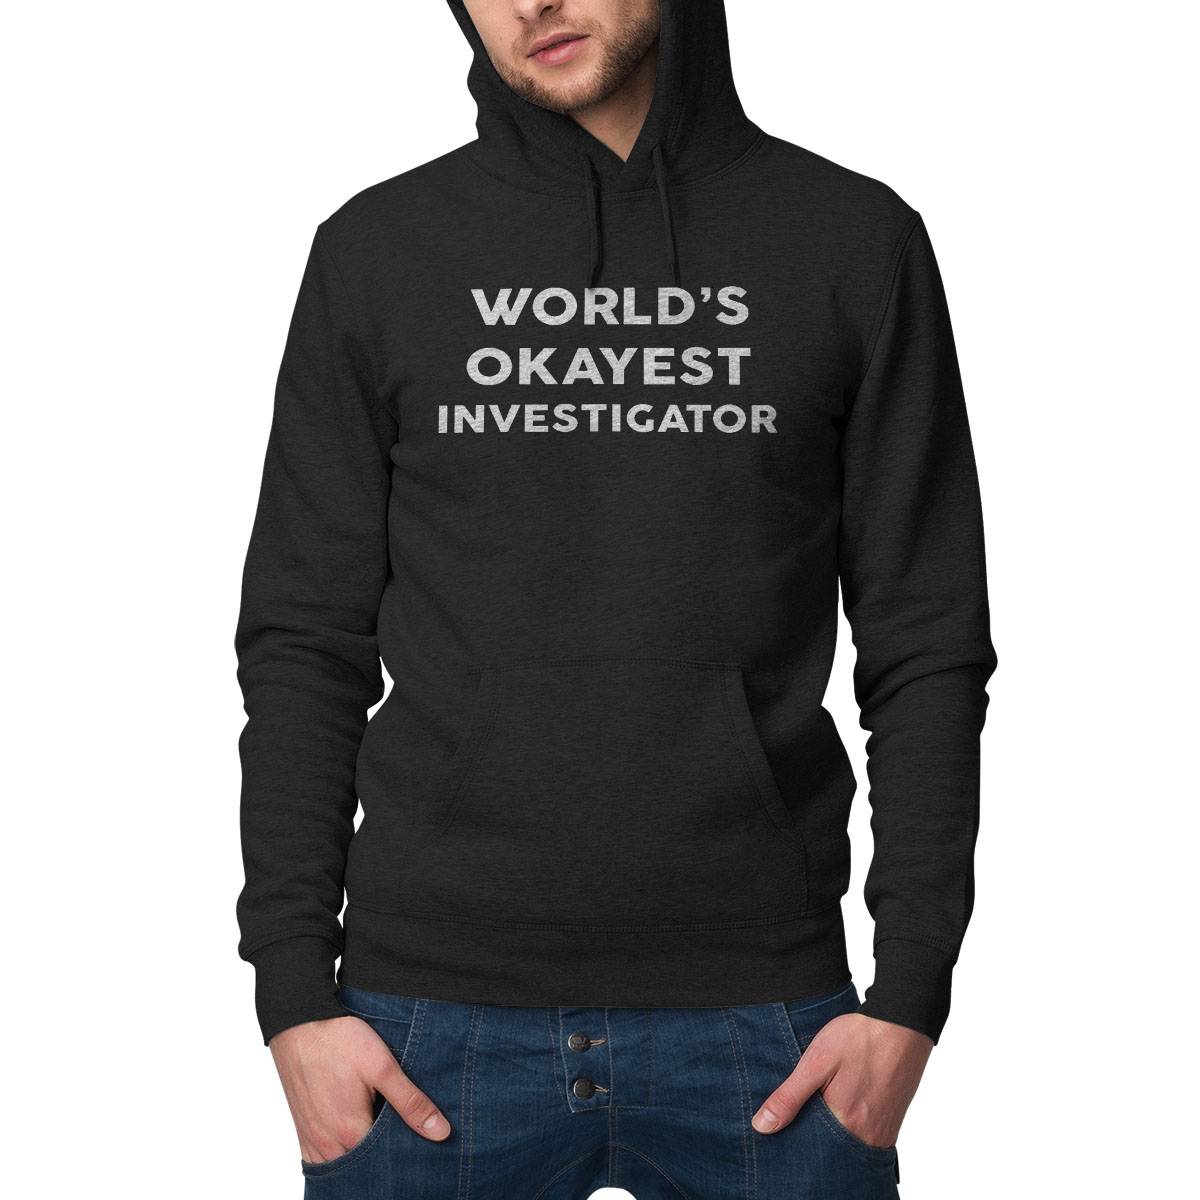 World'S Okayest Investigator T-Shirt For Investigators